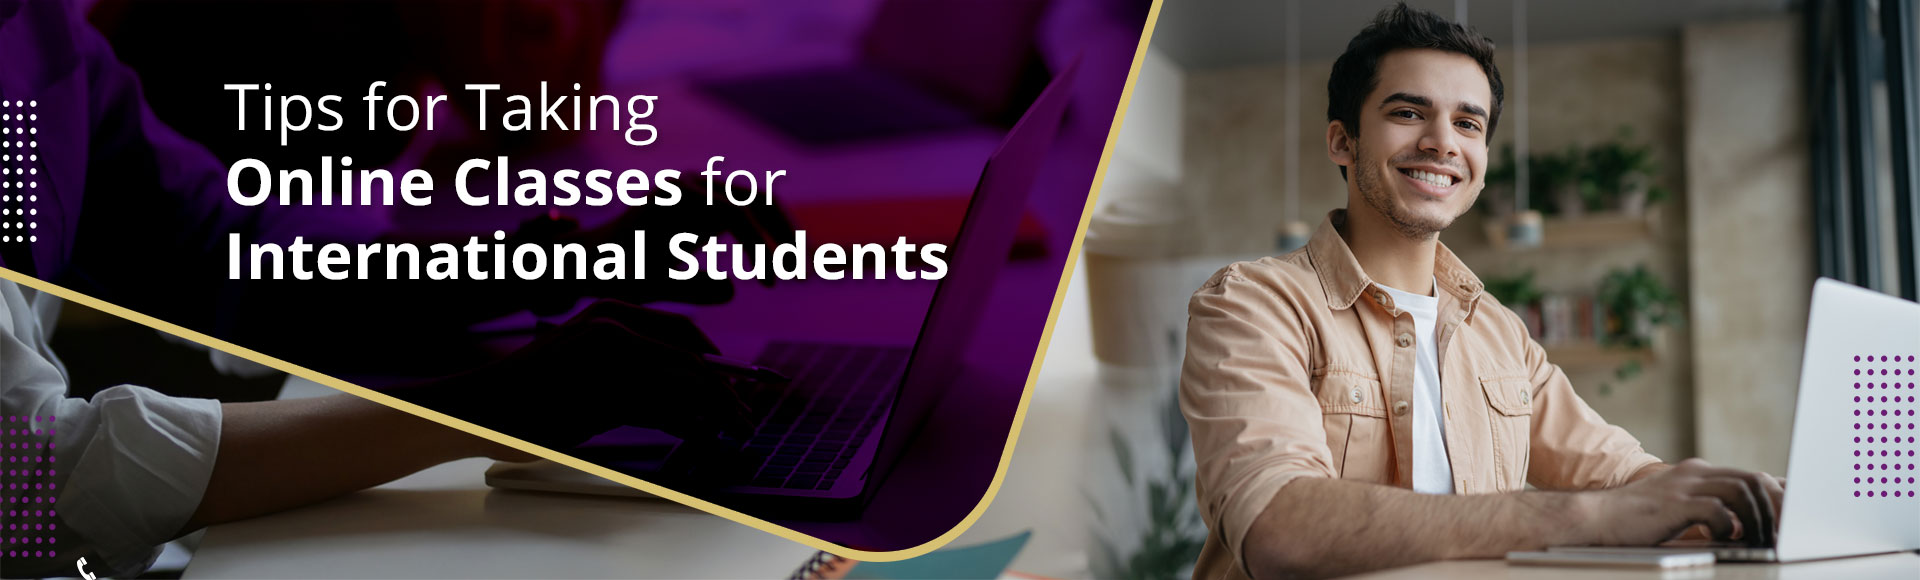 Tips for Taking Online Classes for International Students